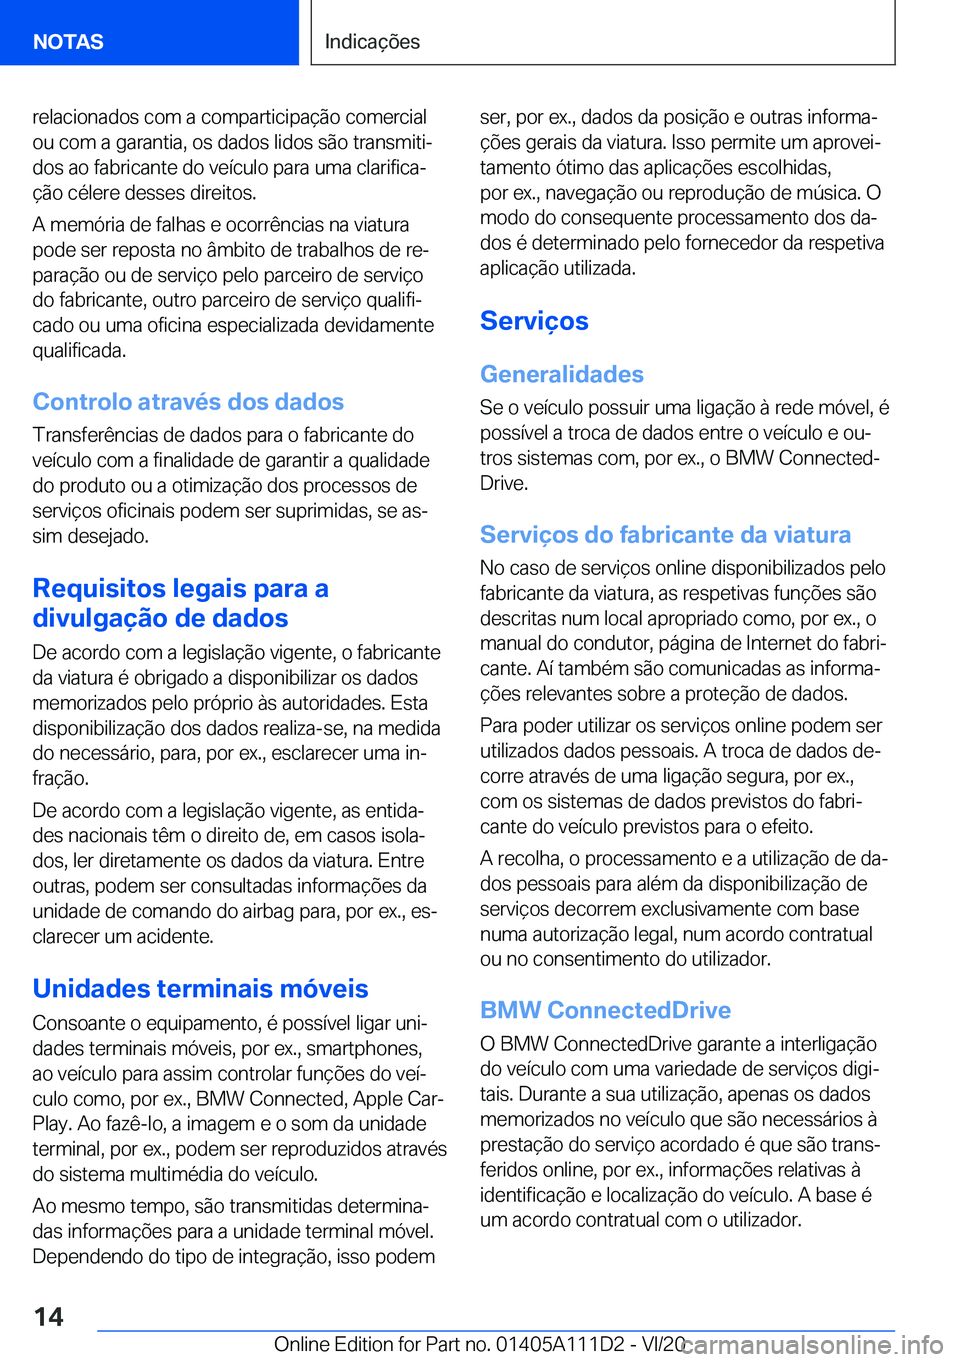 BMW 3 SERIES SEDAN PLUG-IN HYBRID 2021  Manual do condutor (in Portuguese) �r�e�l�a�c�i�o�n�a�d�o�s��c�o�m��a��c�o�m�p�a�r�t�i�c�i�p�a�